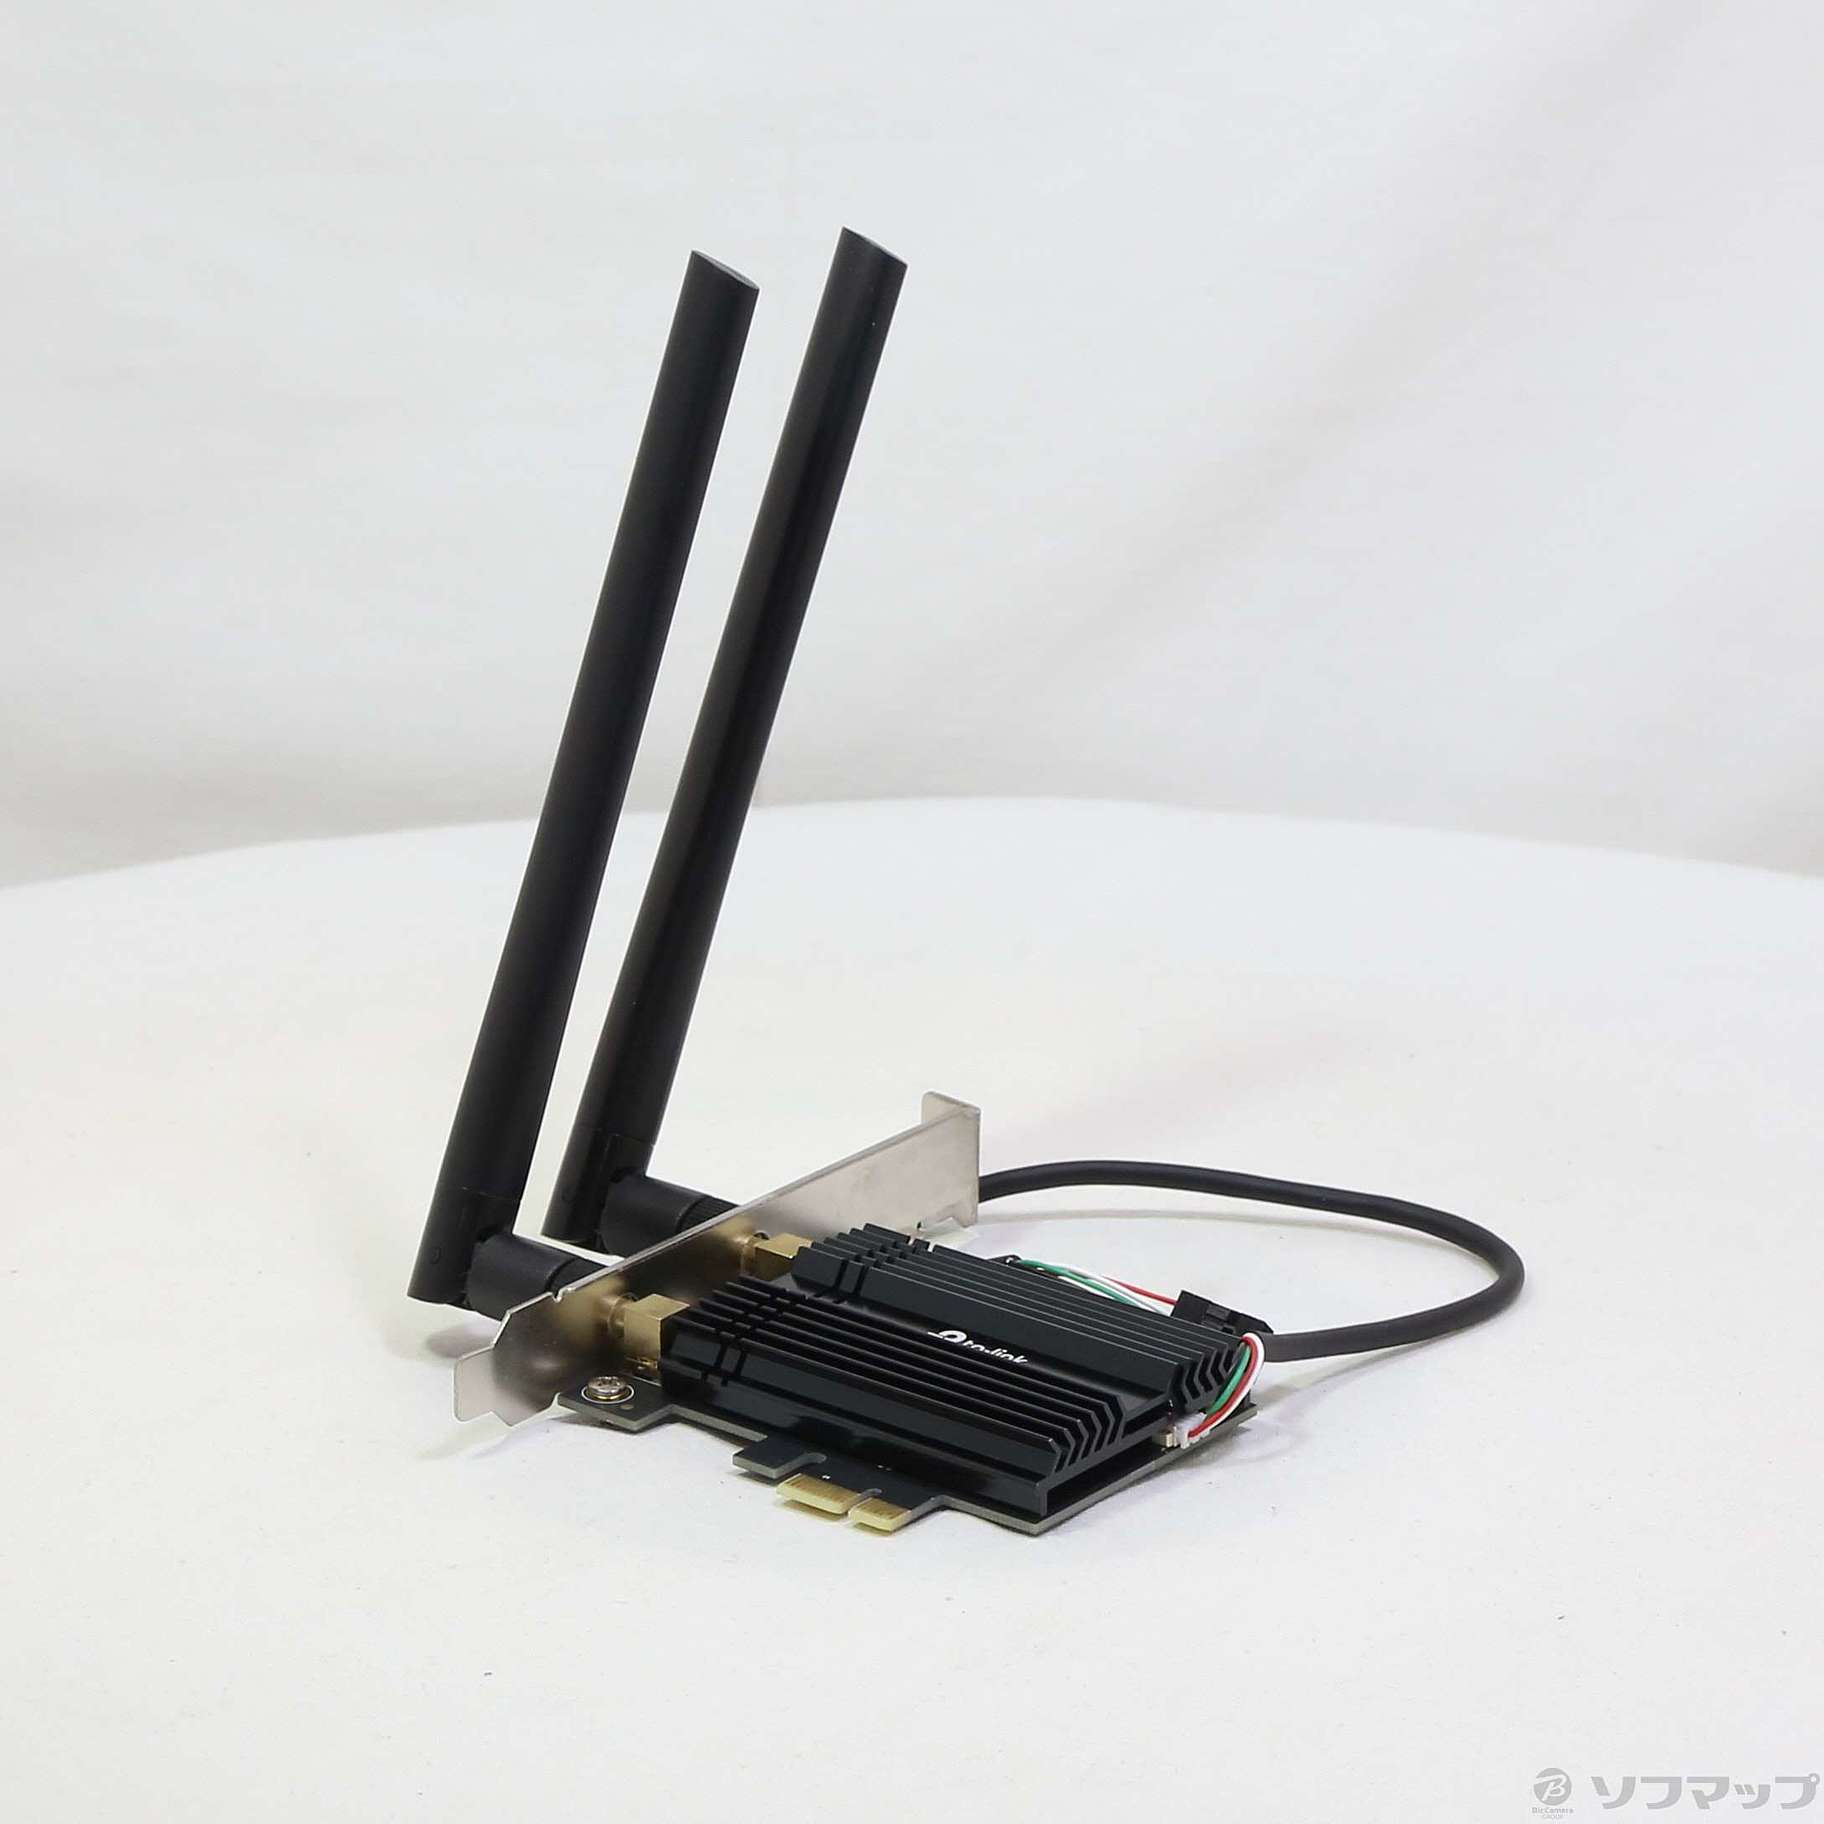 TP-LINK AX3000 Wi-Fi Bluetooth PCIe アダプタ